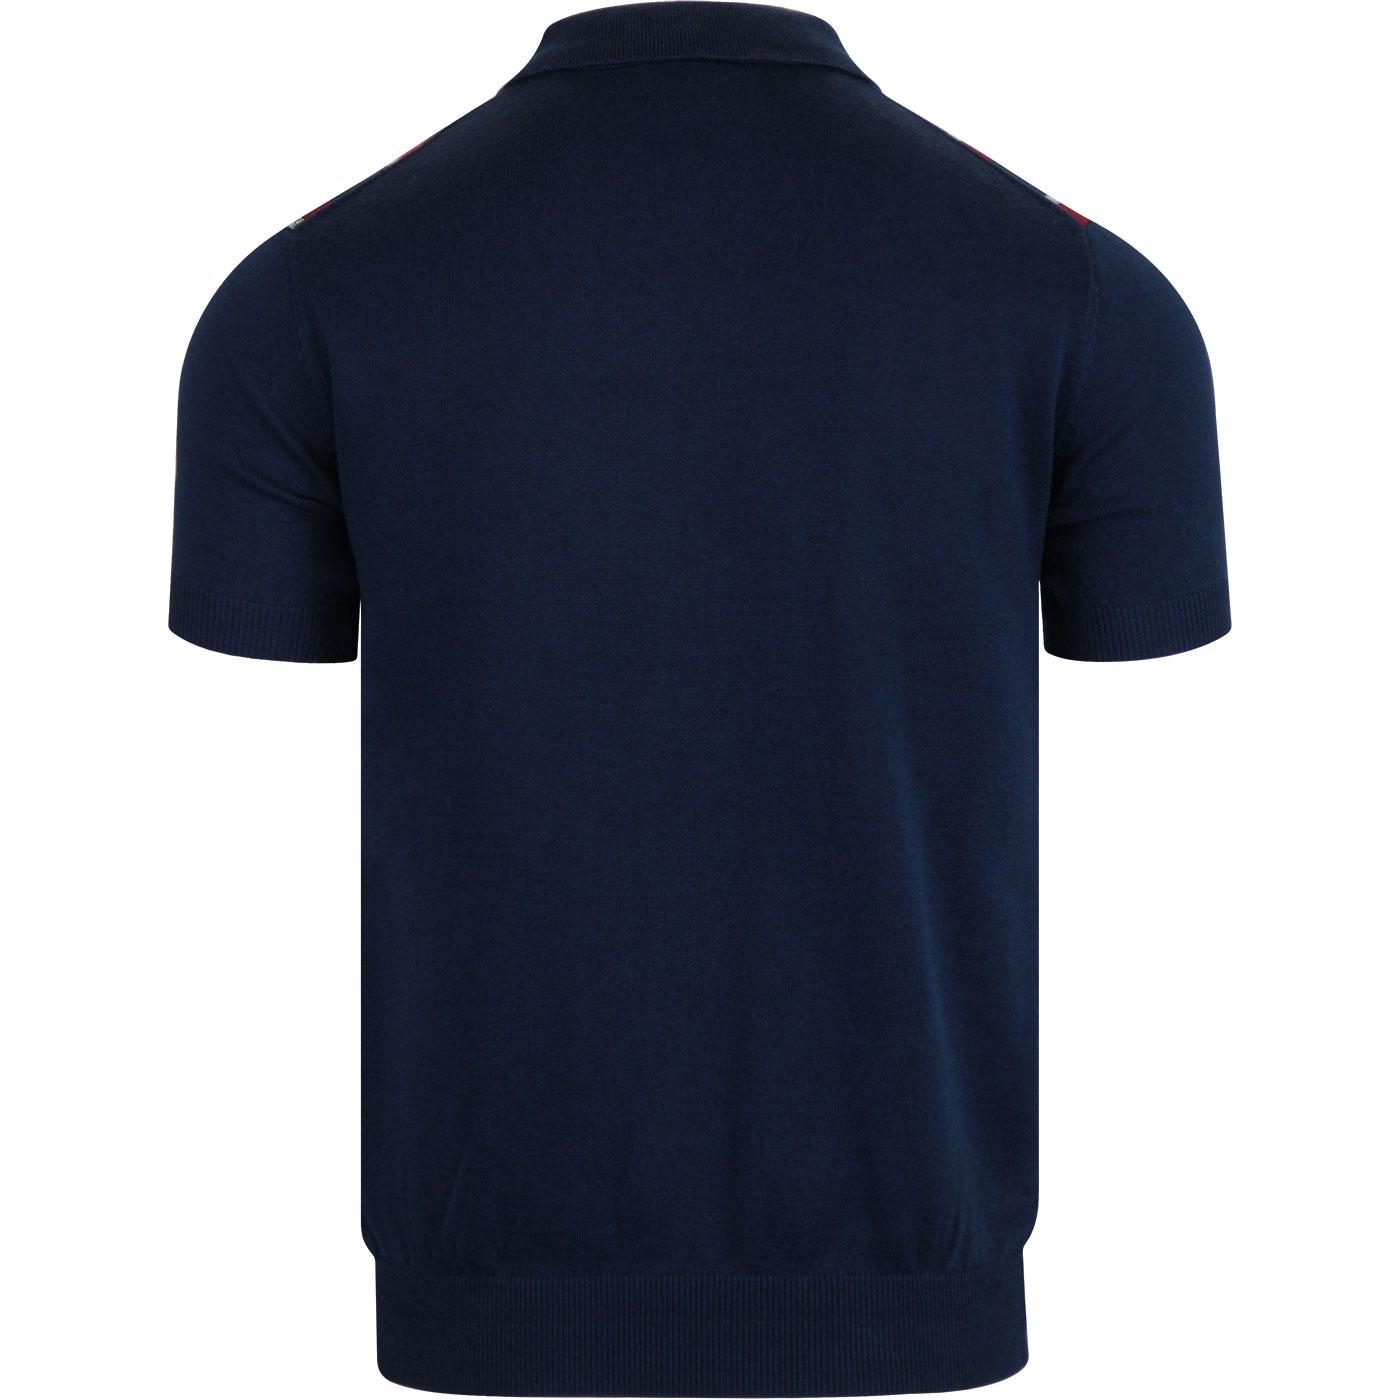 MERC Wilmot Stripe Knitted Retro 60s Mod Polo Shirt in Navy